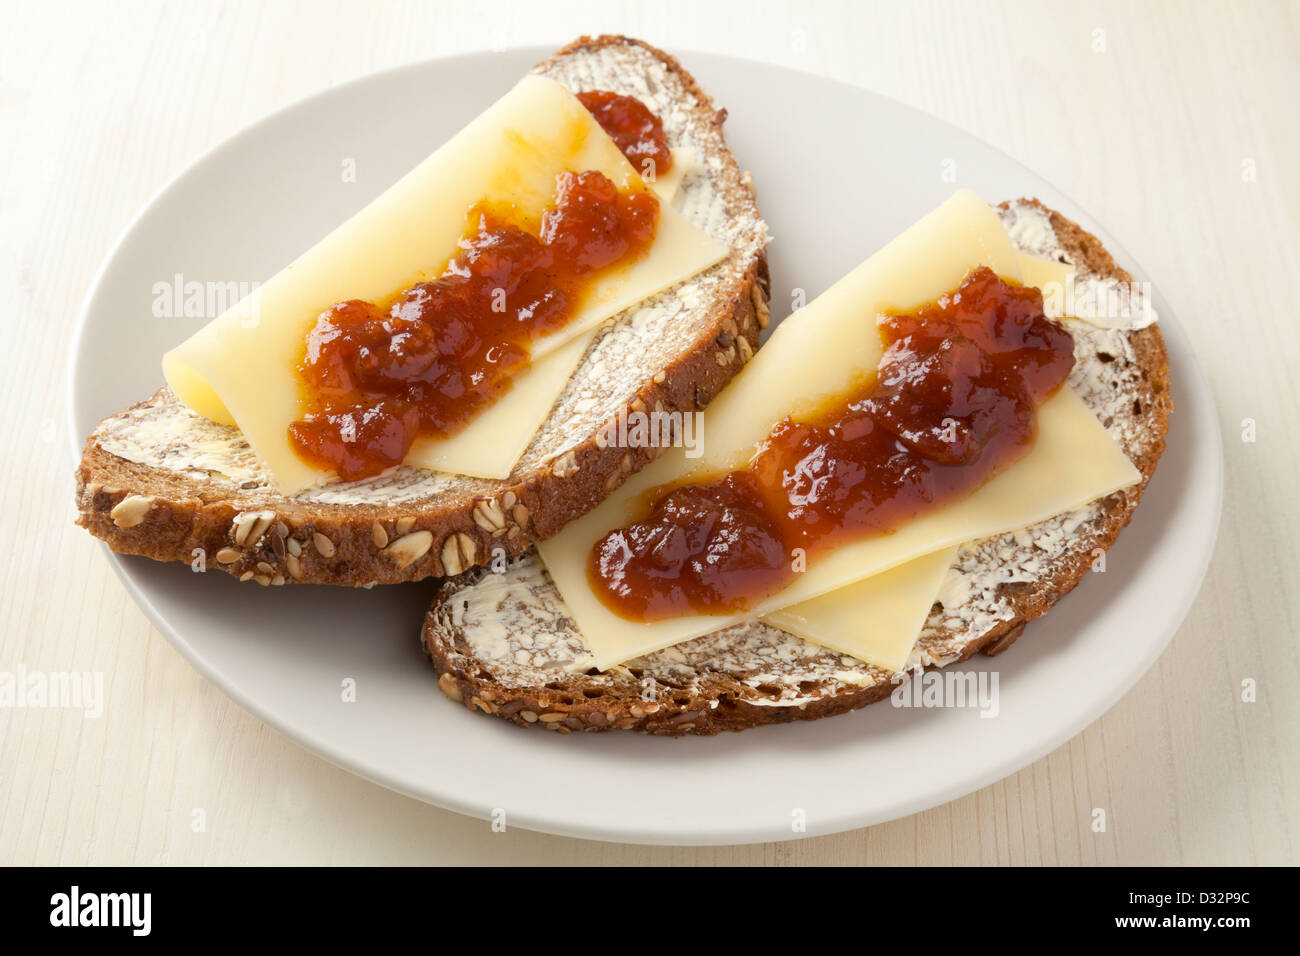 Cheese and Chutney sandwich Stock Photo